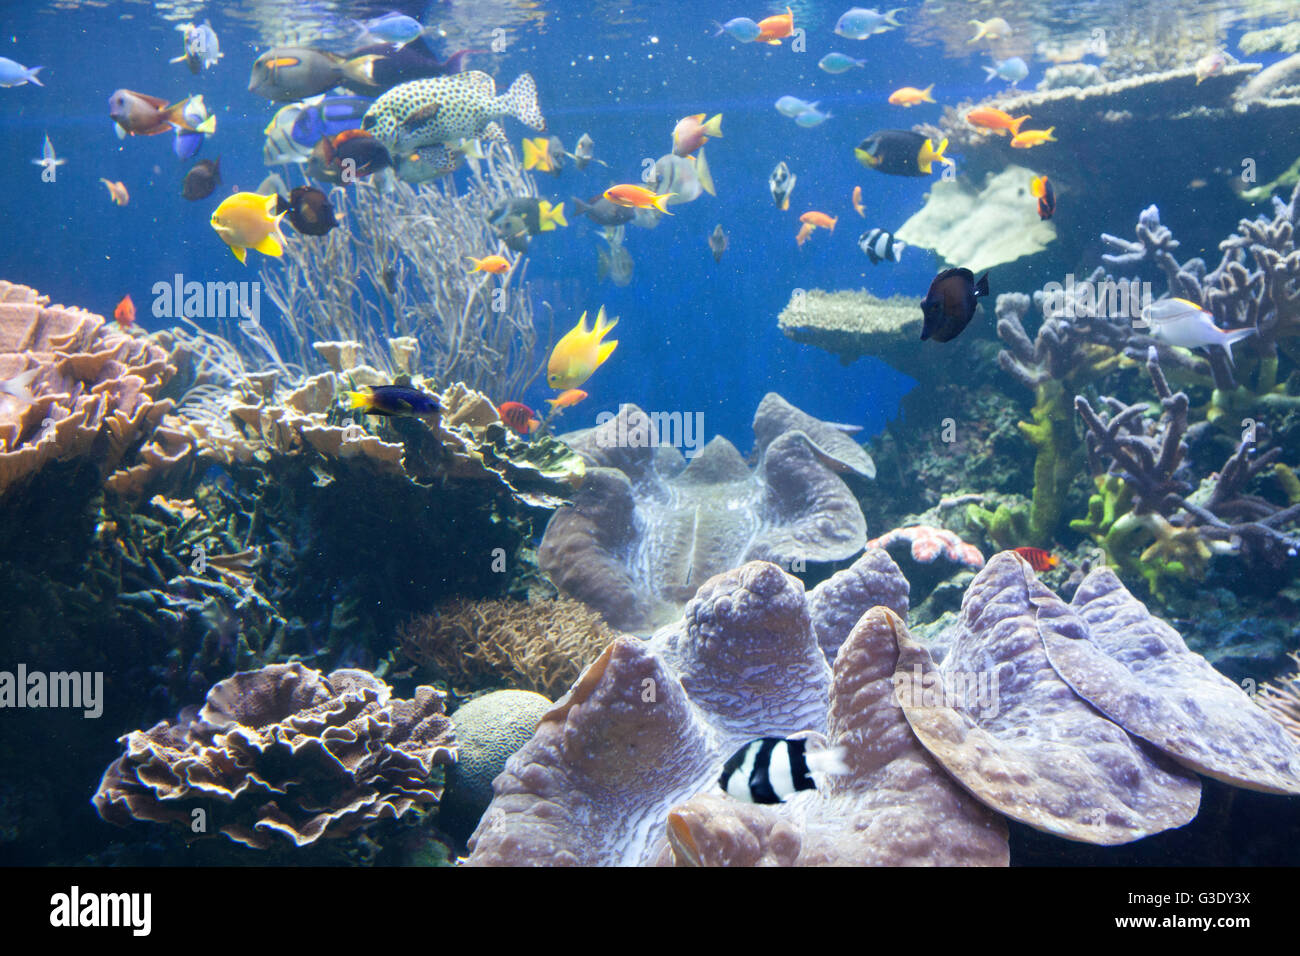 View of aquatic display at Waikiki Aquarium.  Fish and reef ecosystem. Stock Photo